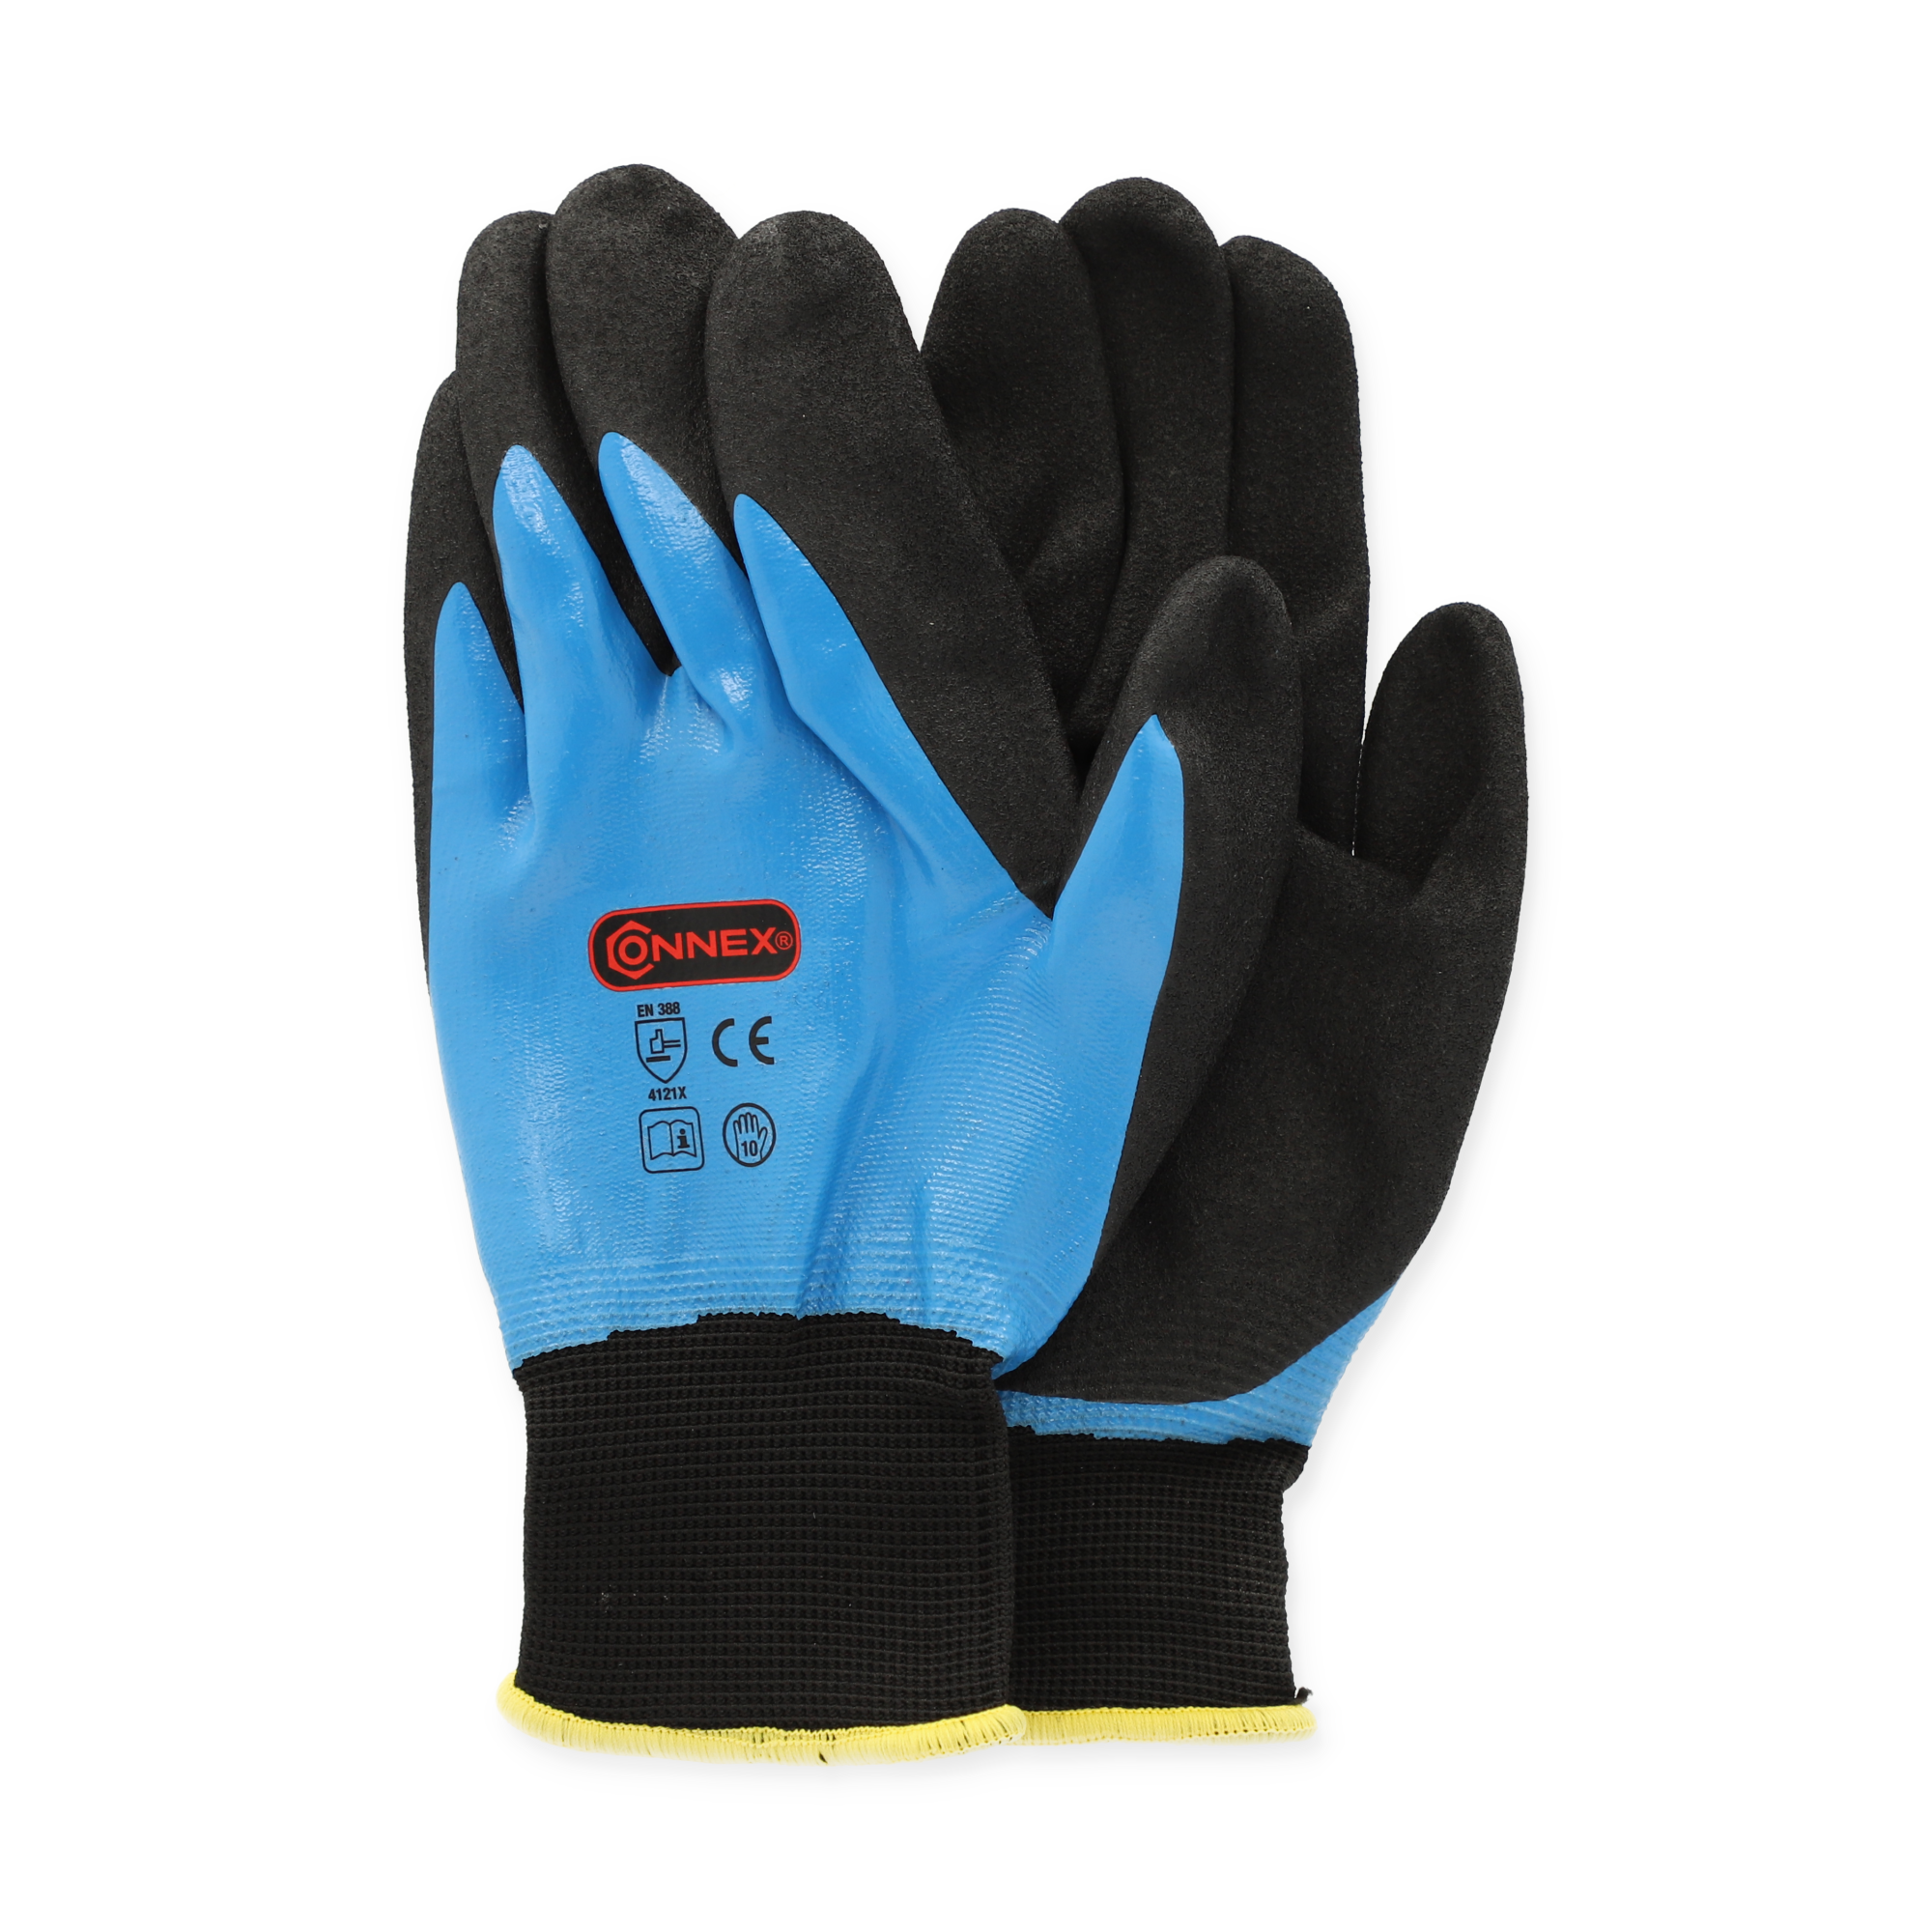 Handschuhe blau/schwarz Gr. 10 + product picture